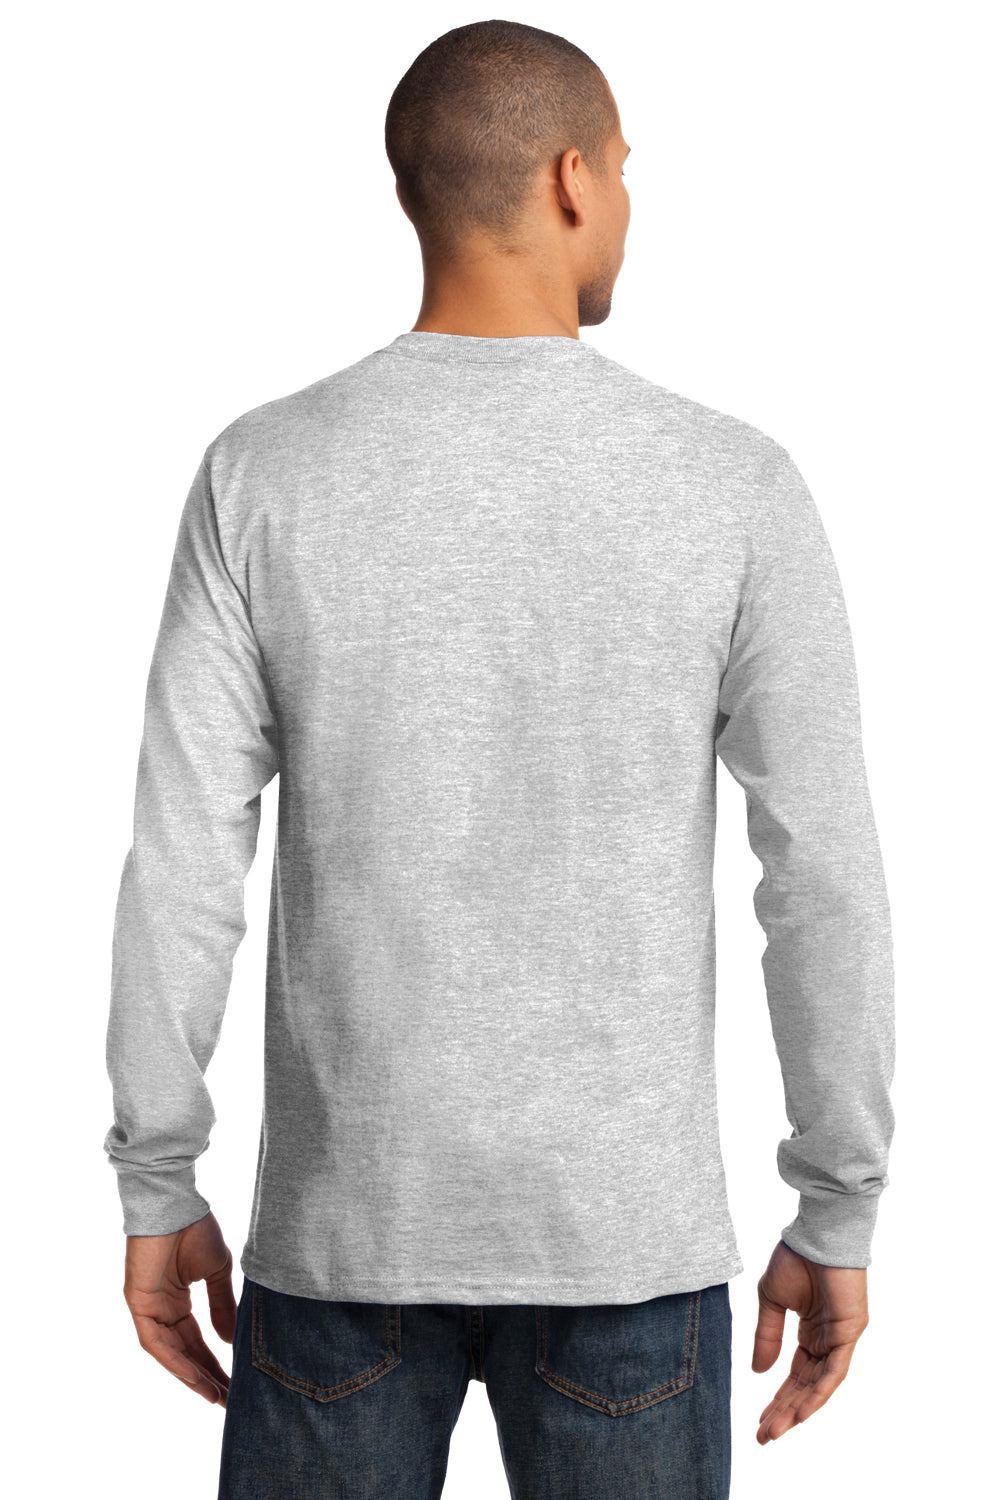 Port & Company PC61LS Mens Essential Long Sleeve Crewneck T-Shirt Ash Grey Back